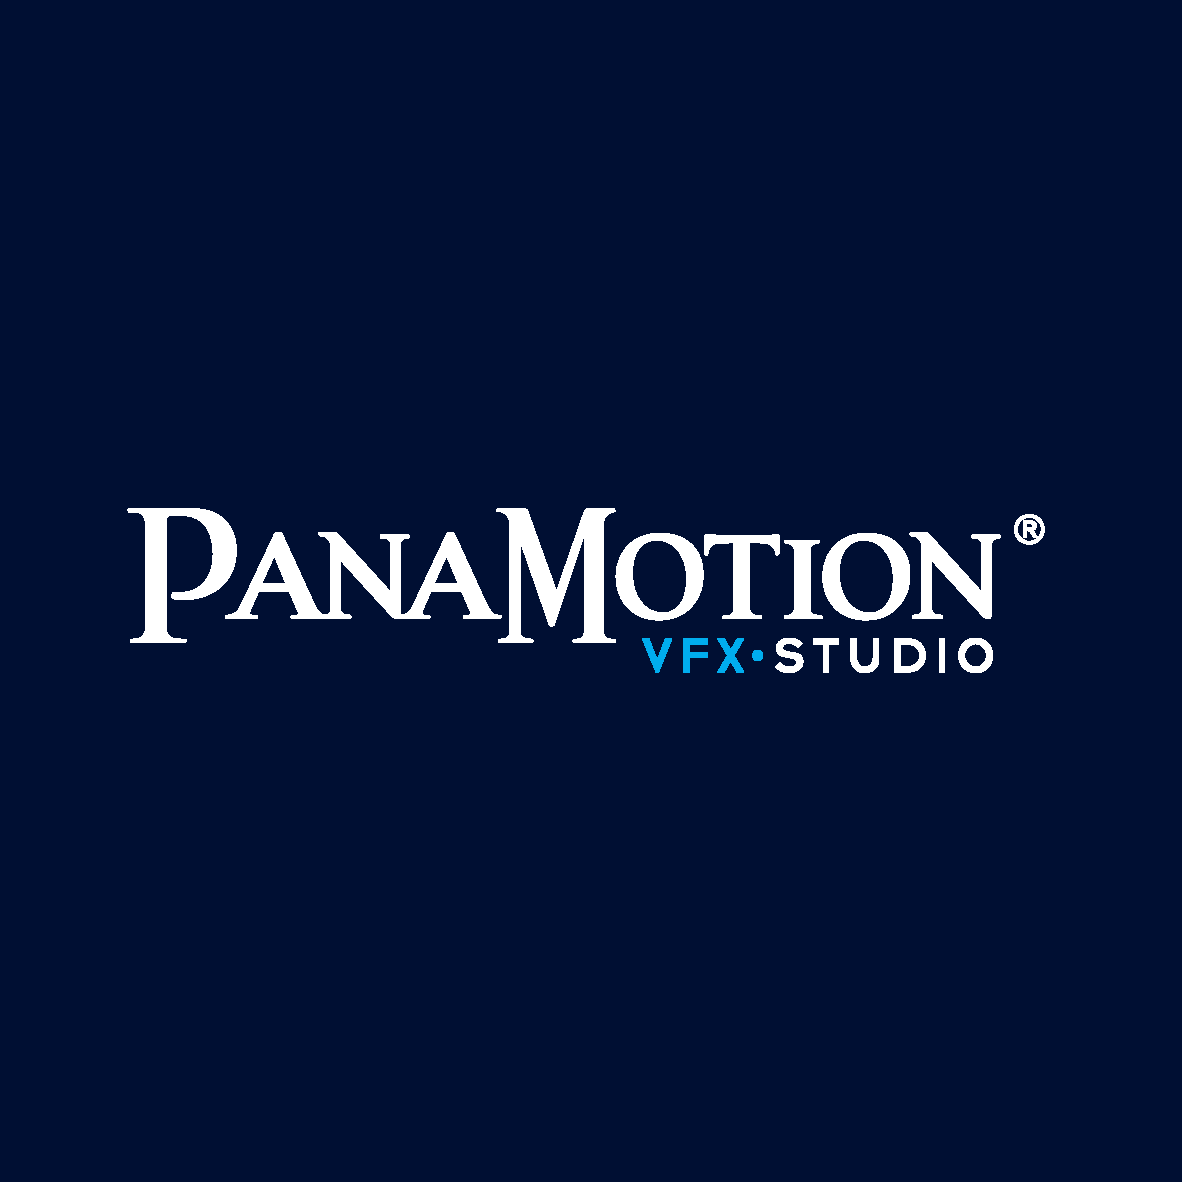 Panamotion Vfx Studio